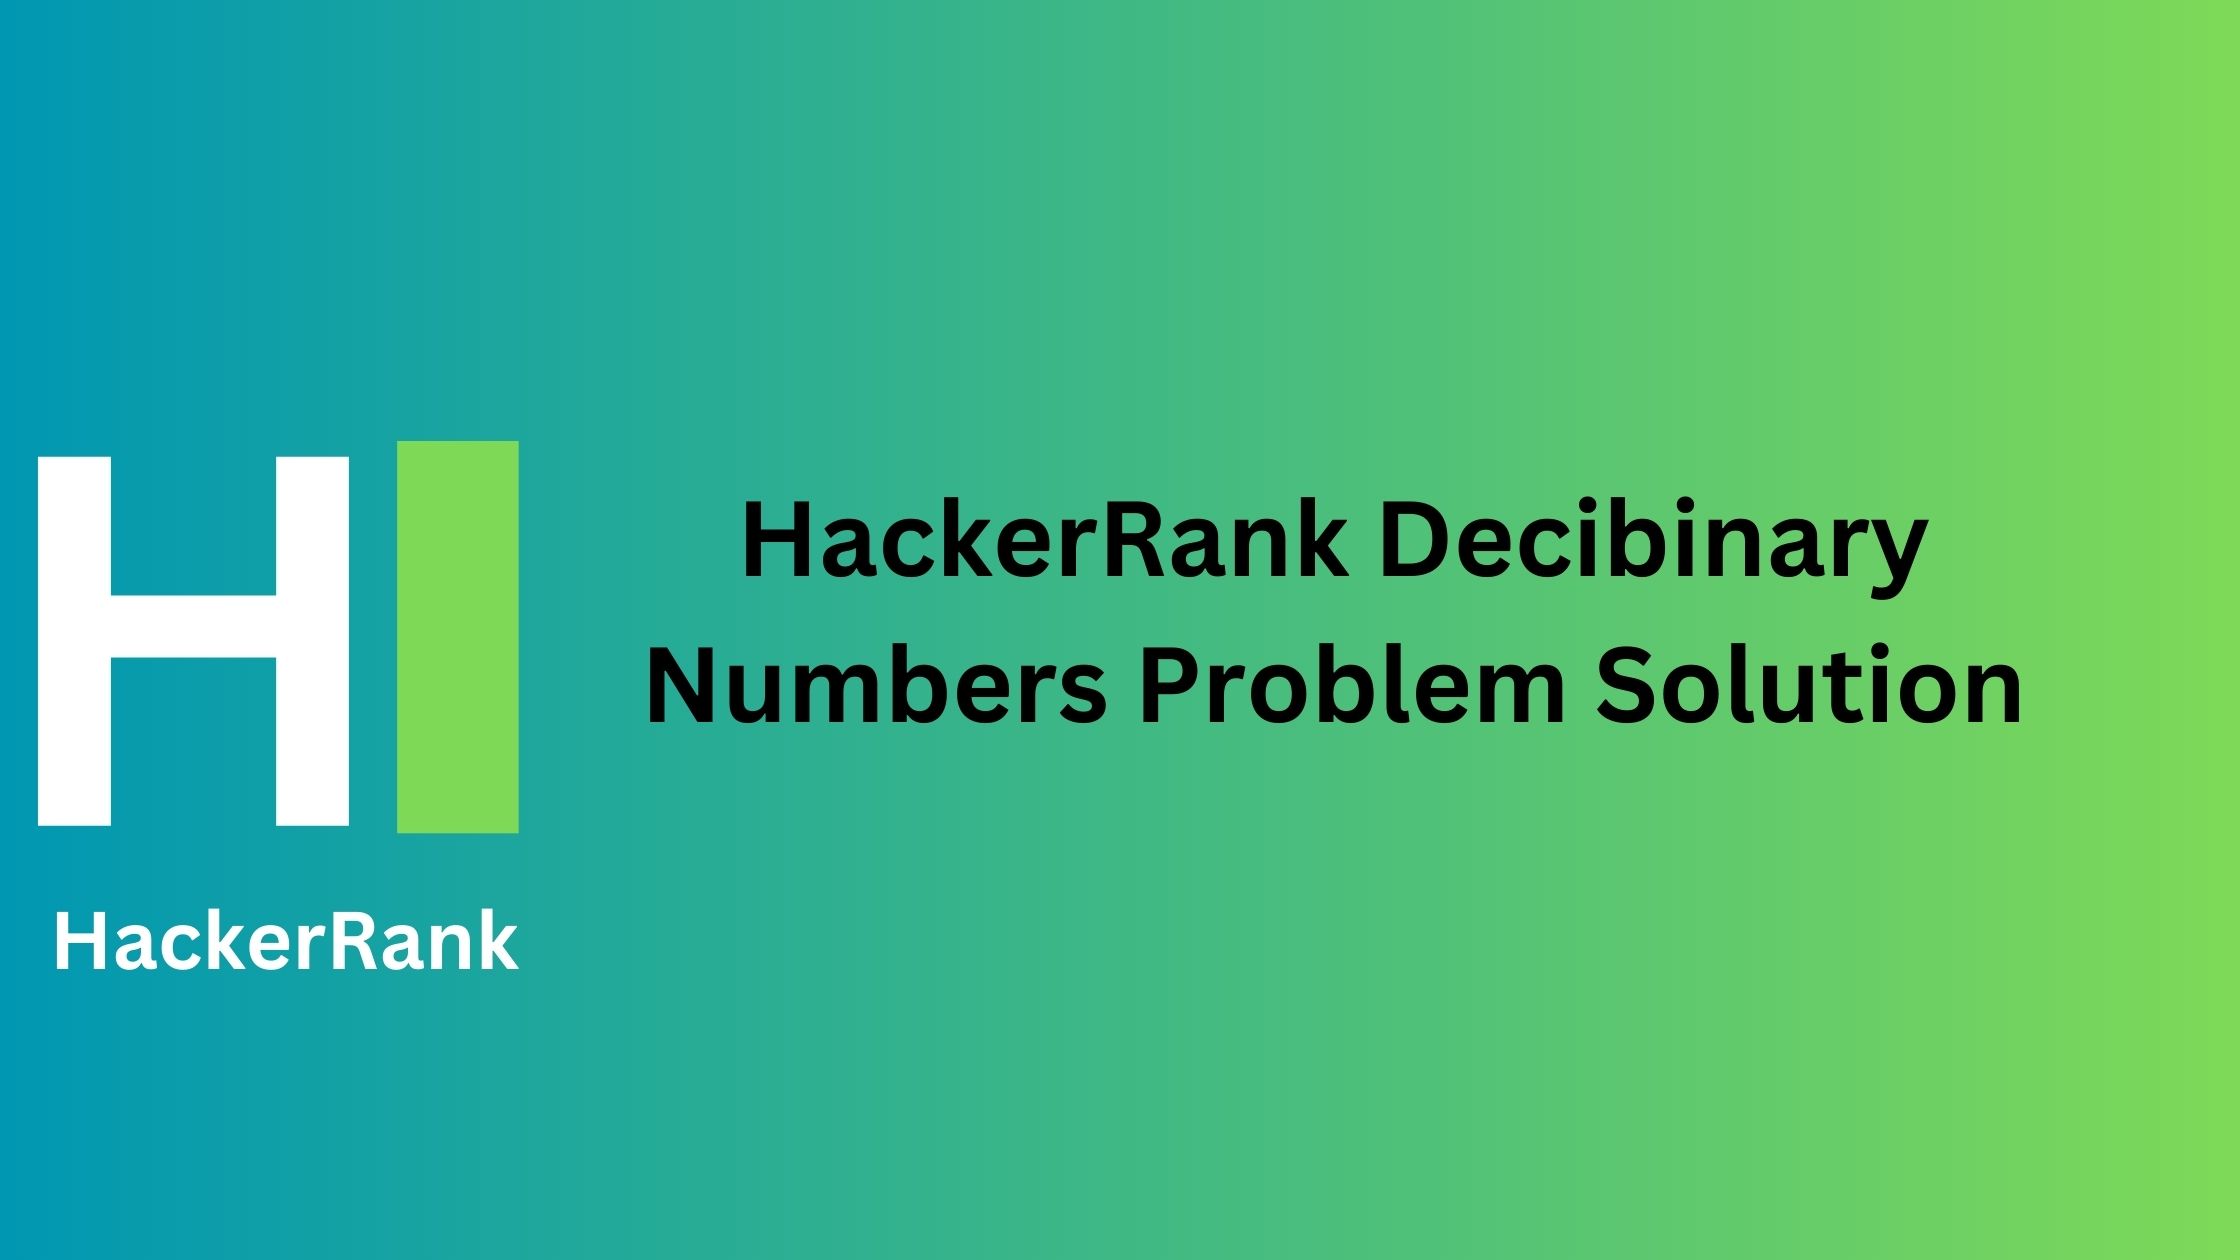 HackerRank Decibinary Numbers Problem Solution